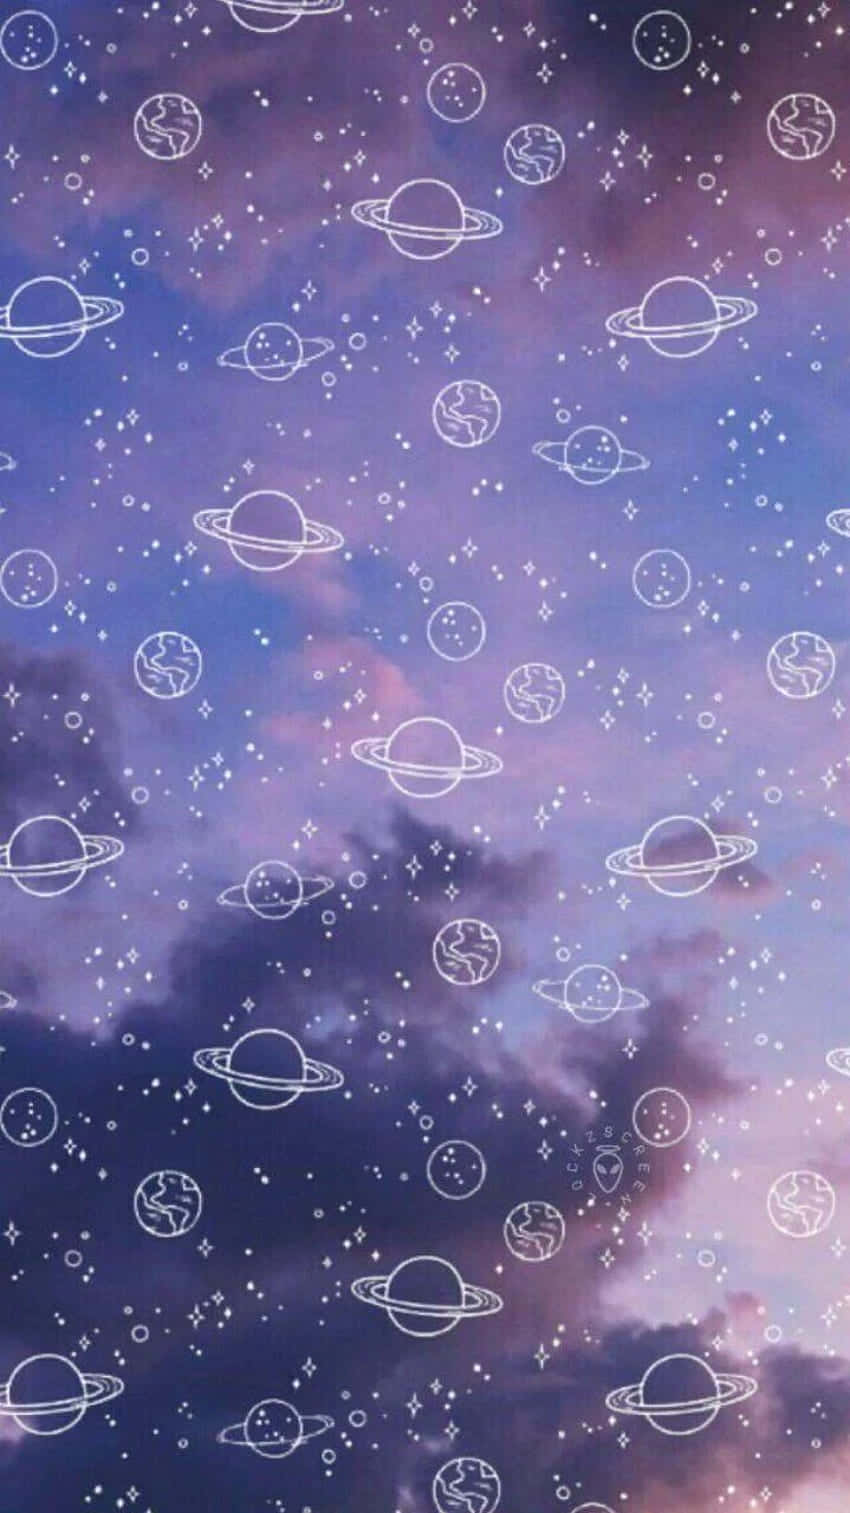 Celestial_ Dreams_ Background Wallpaper